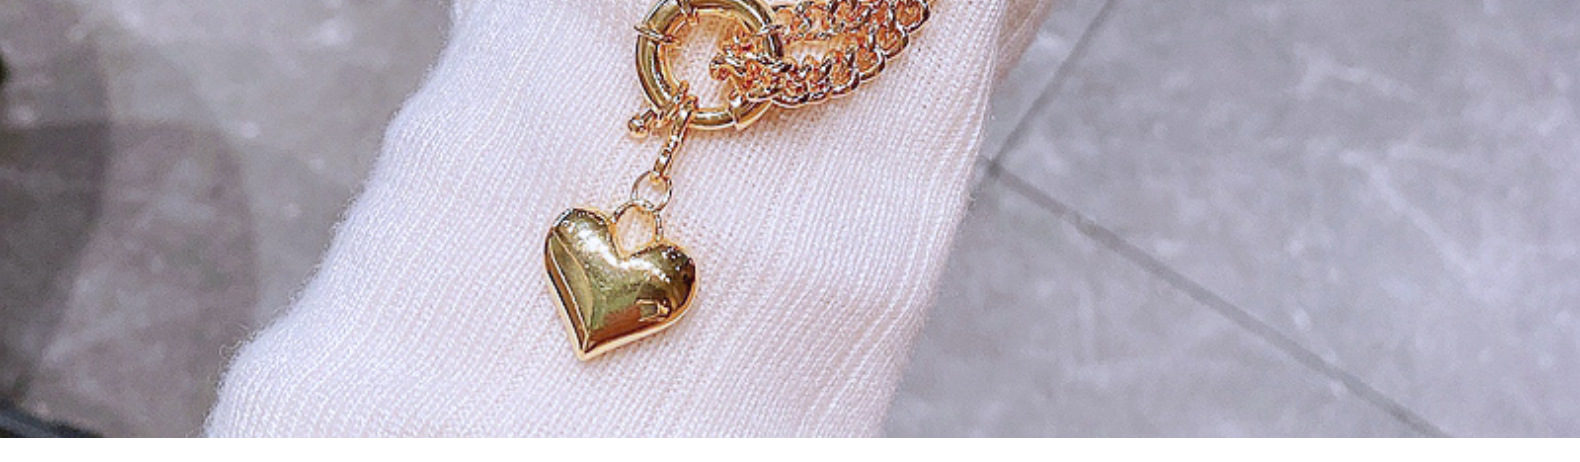 Collar en forma de corazn Chapado en cobre Oro Moda Asimtrica Cadena de clavcula Joyerapicture7